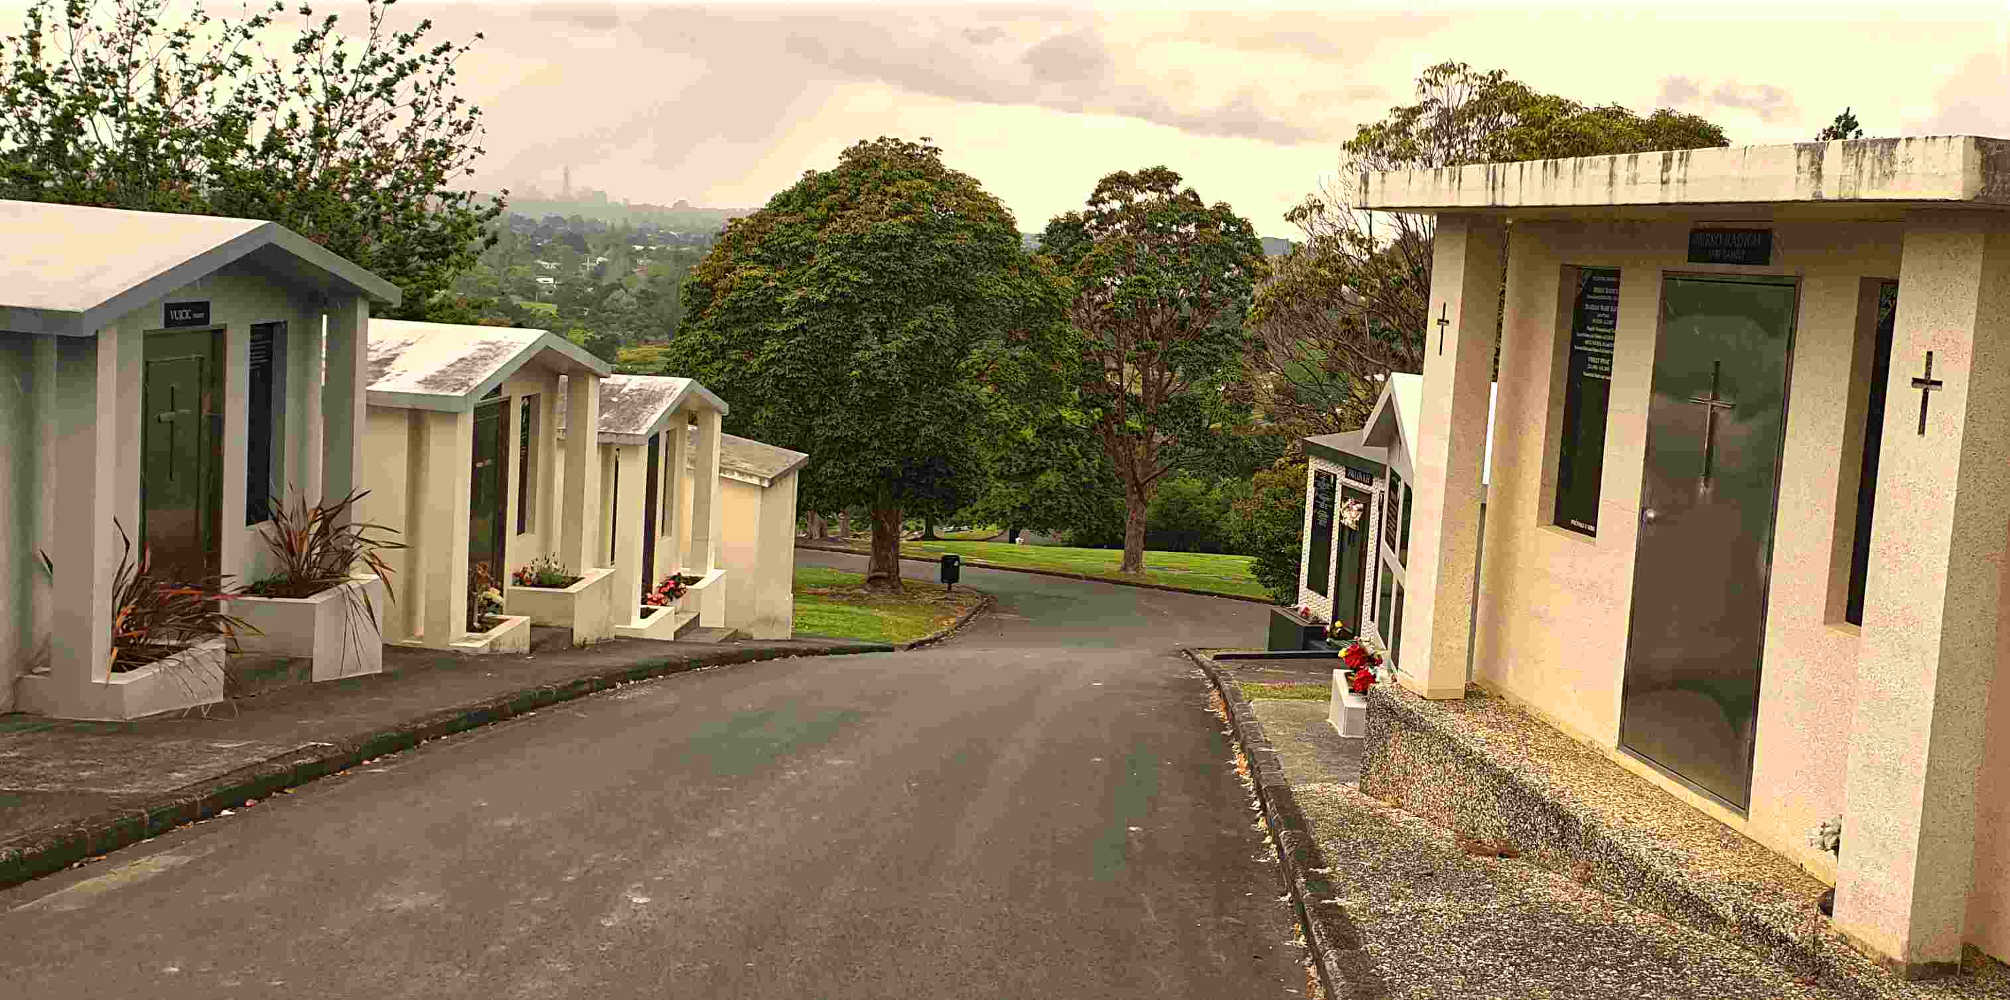 Croatian Catholic sector, Waikumete cemetery, Auckland, New Zealand